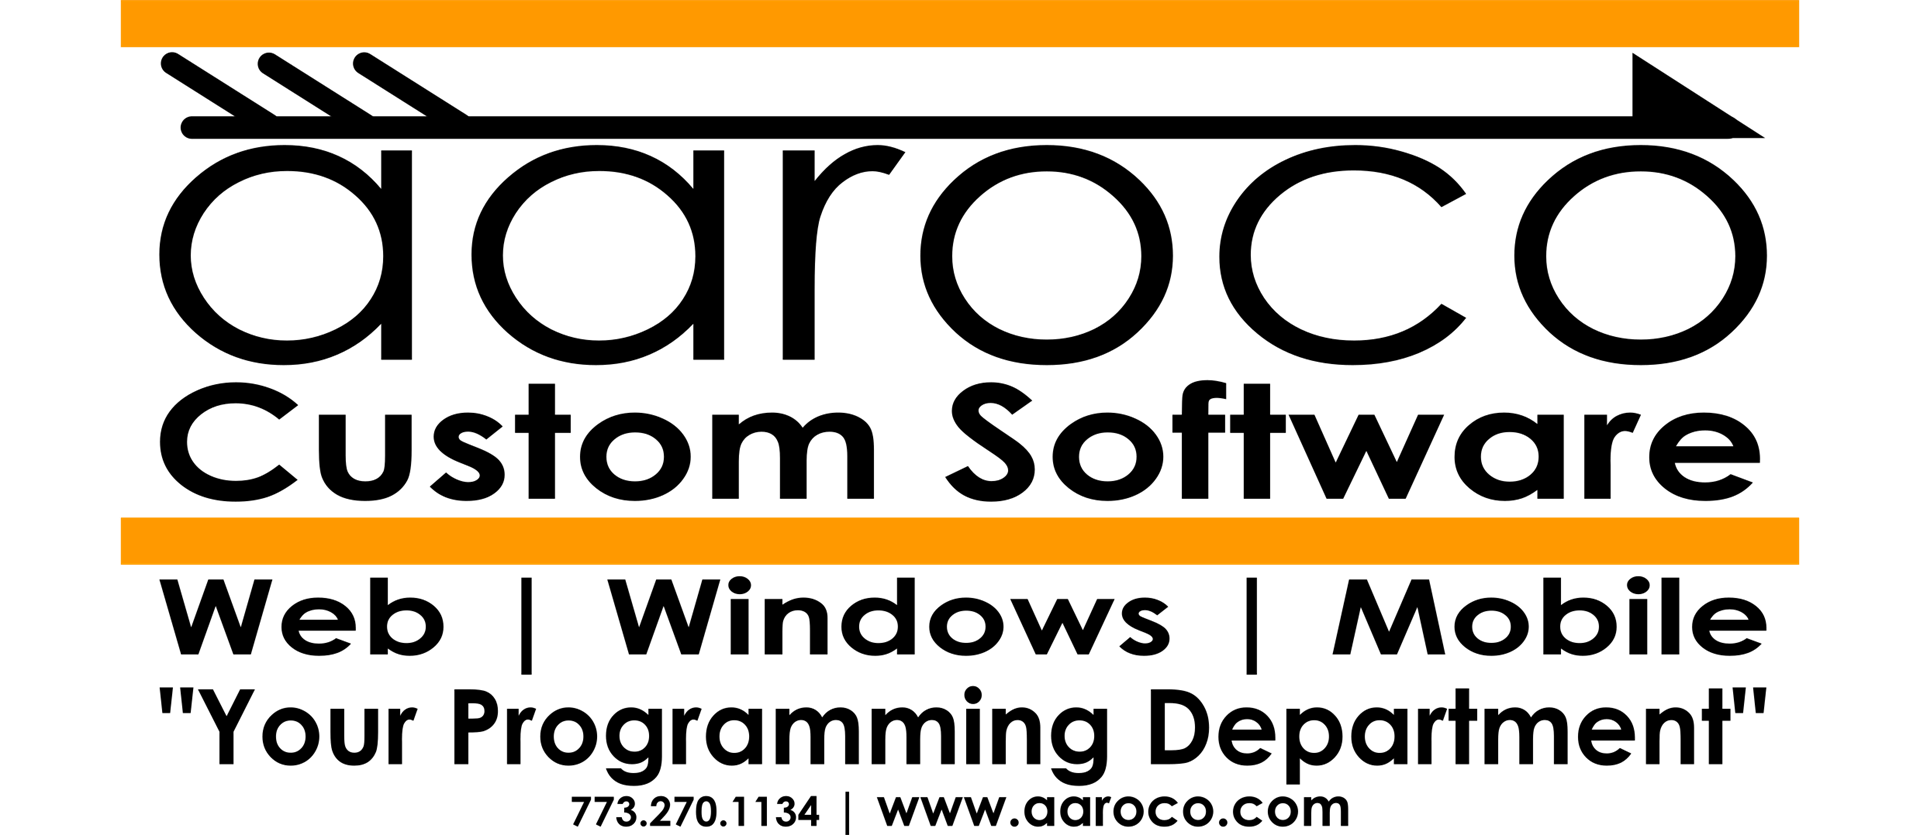 Aaroco Custom Software - Web Apps, Windows Apps, Mobile Apps